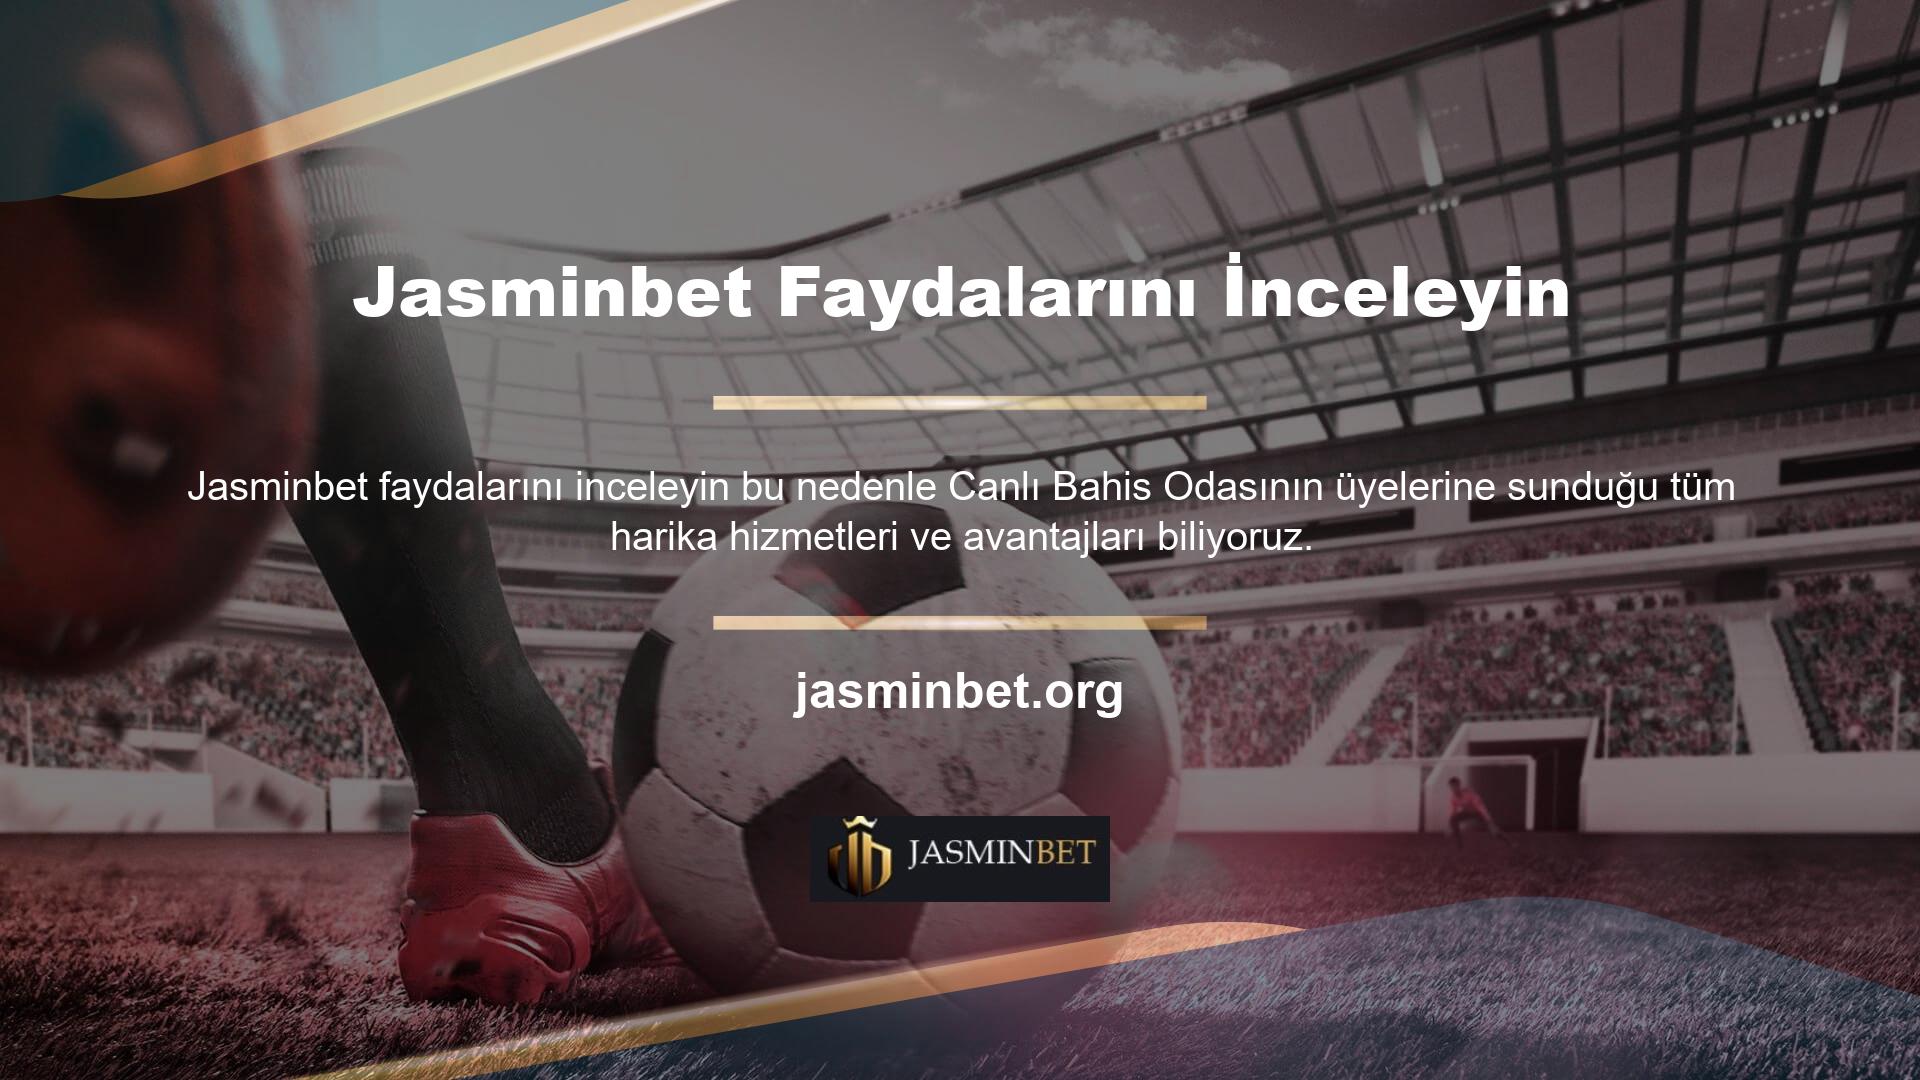 Jasminbet canlı bahis sitesi Comodo SSL sertifikasına sahiptir